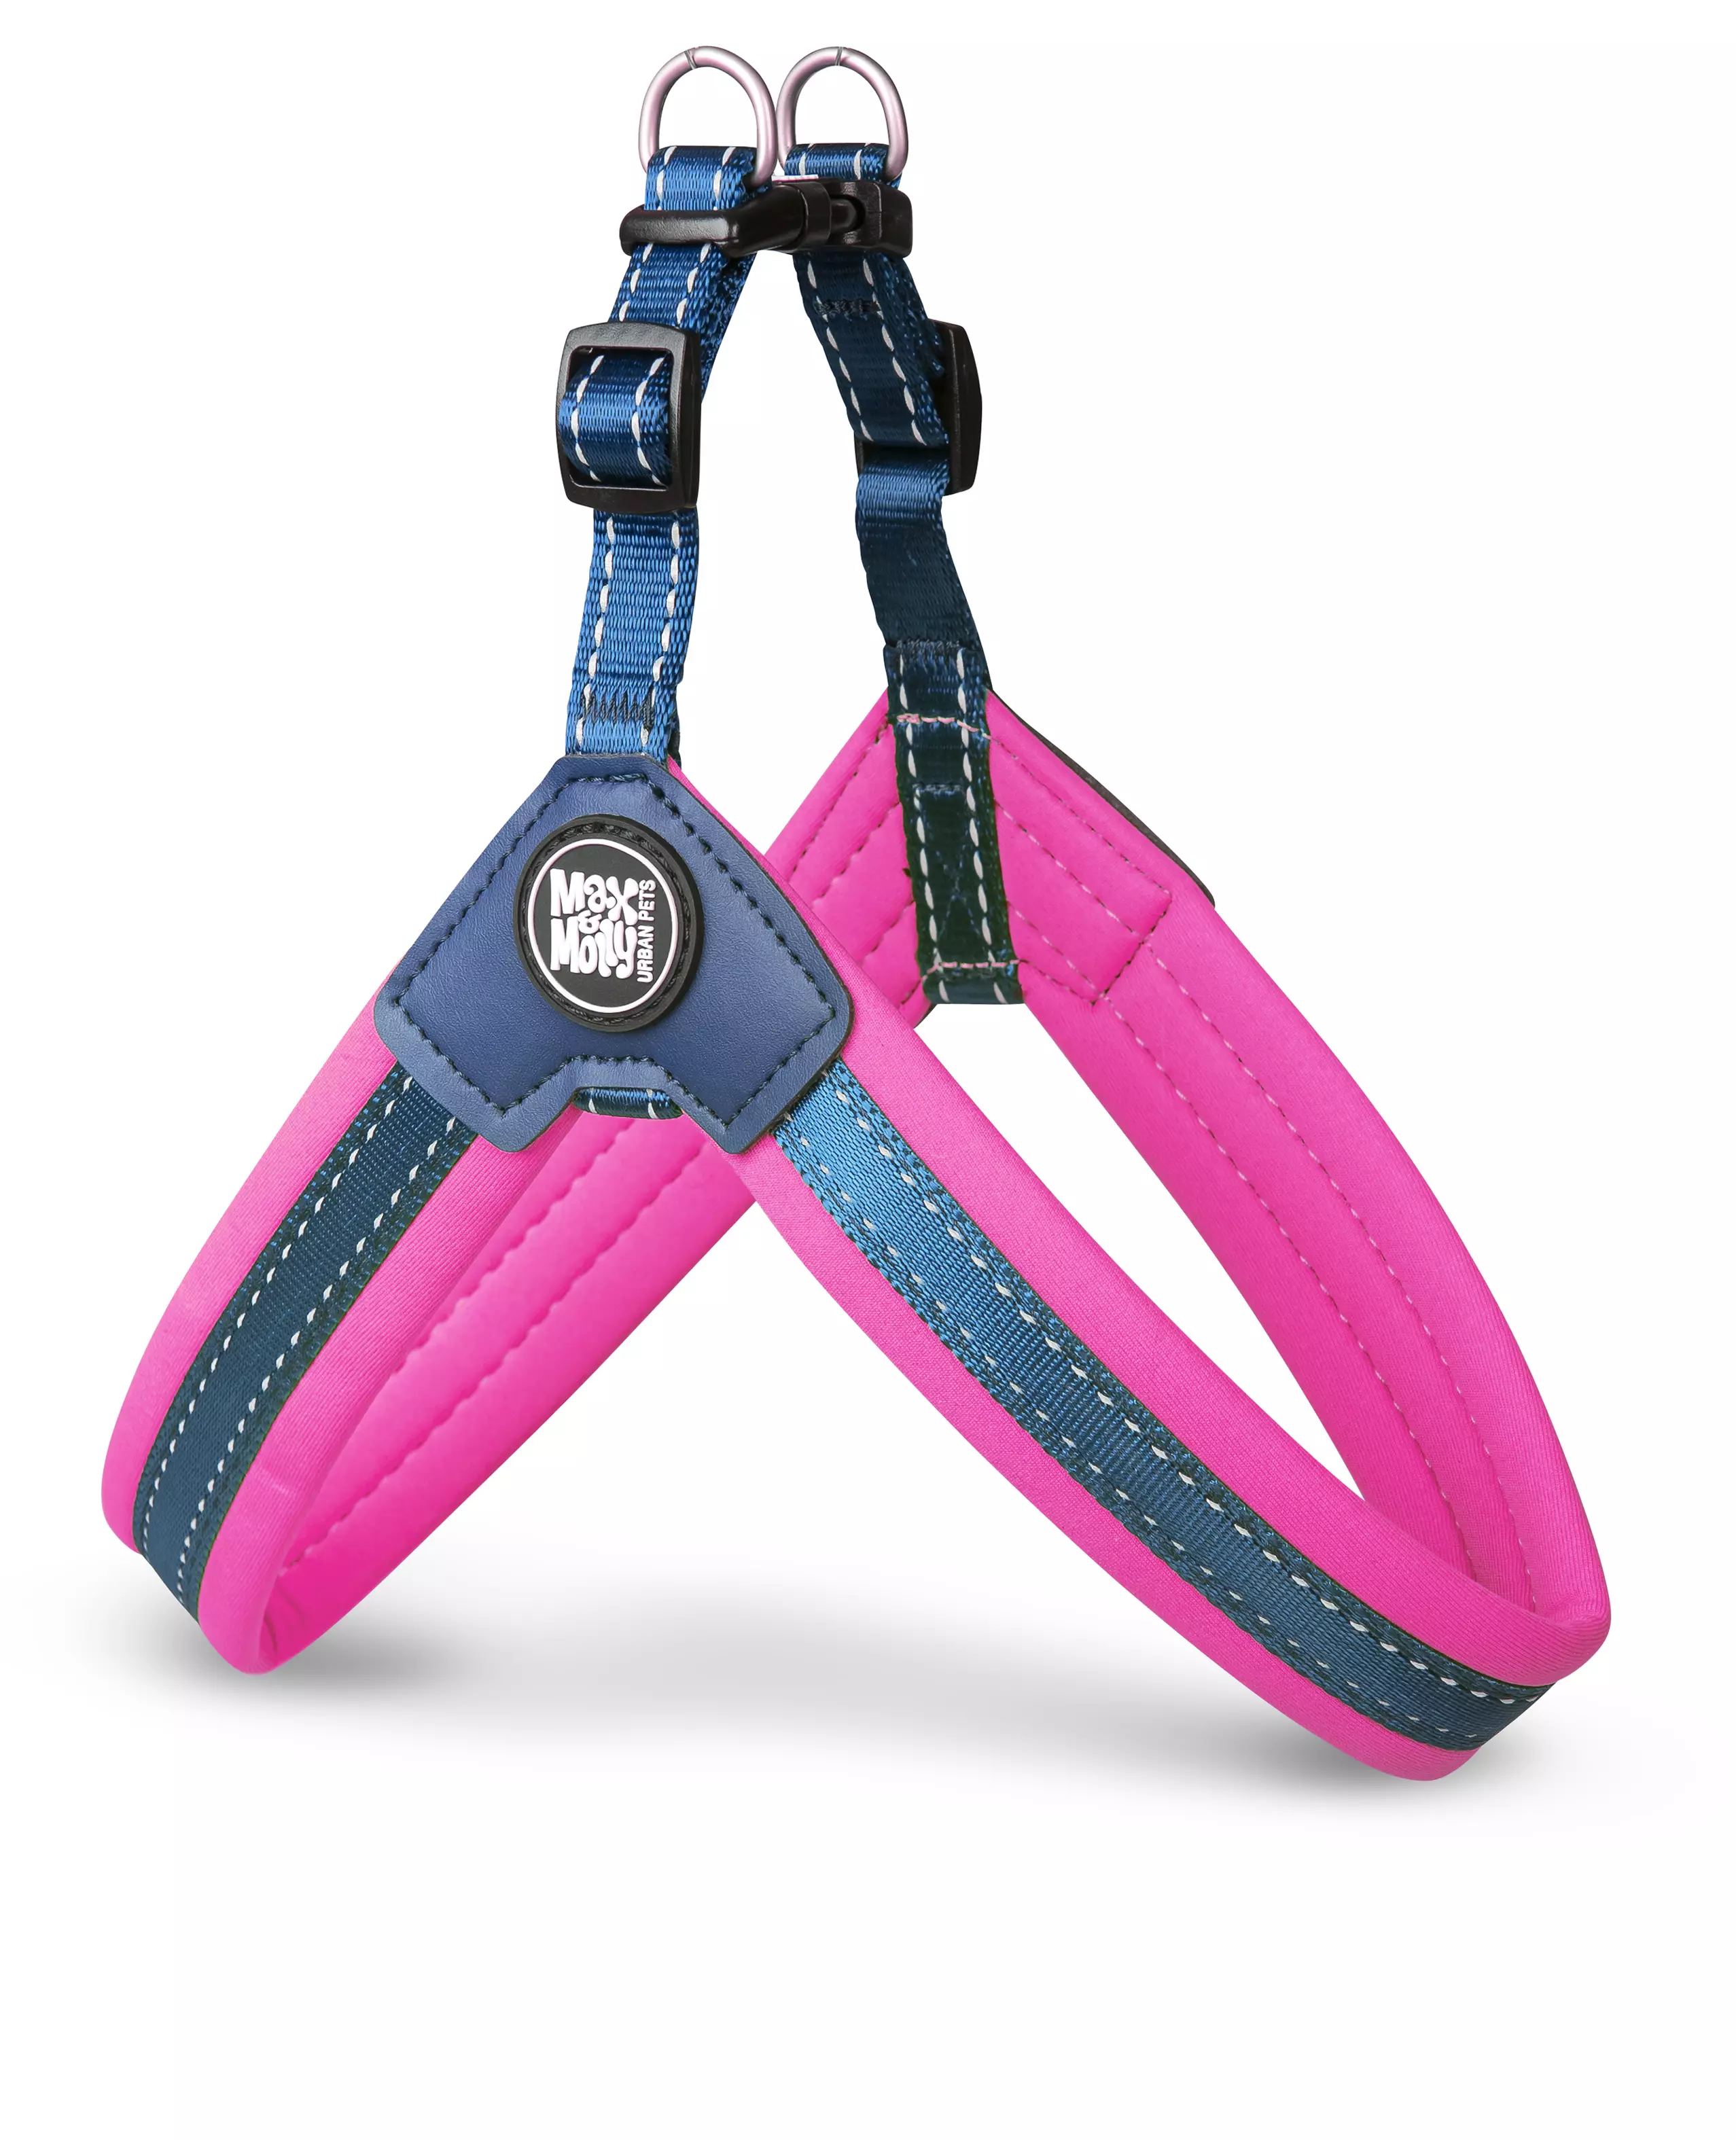 Max & Molly Q-Fit Harness - Matrix Pink - XL